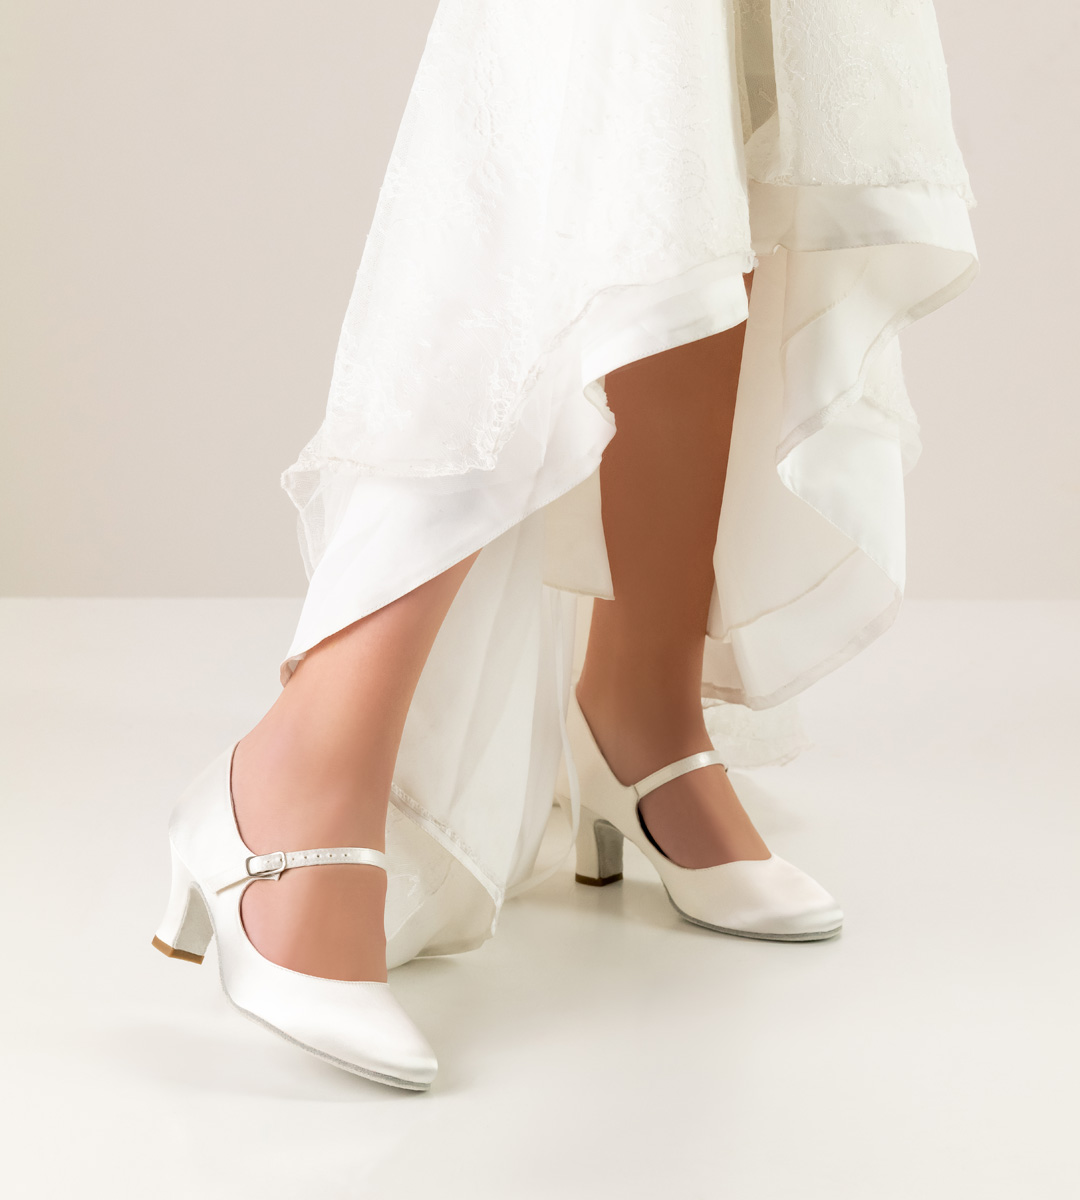 Werner Kern bridal shoe with 6 cm high heel and instep straps